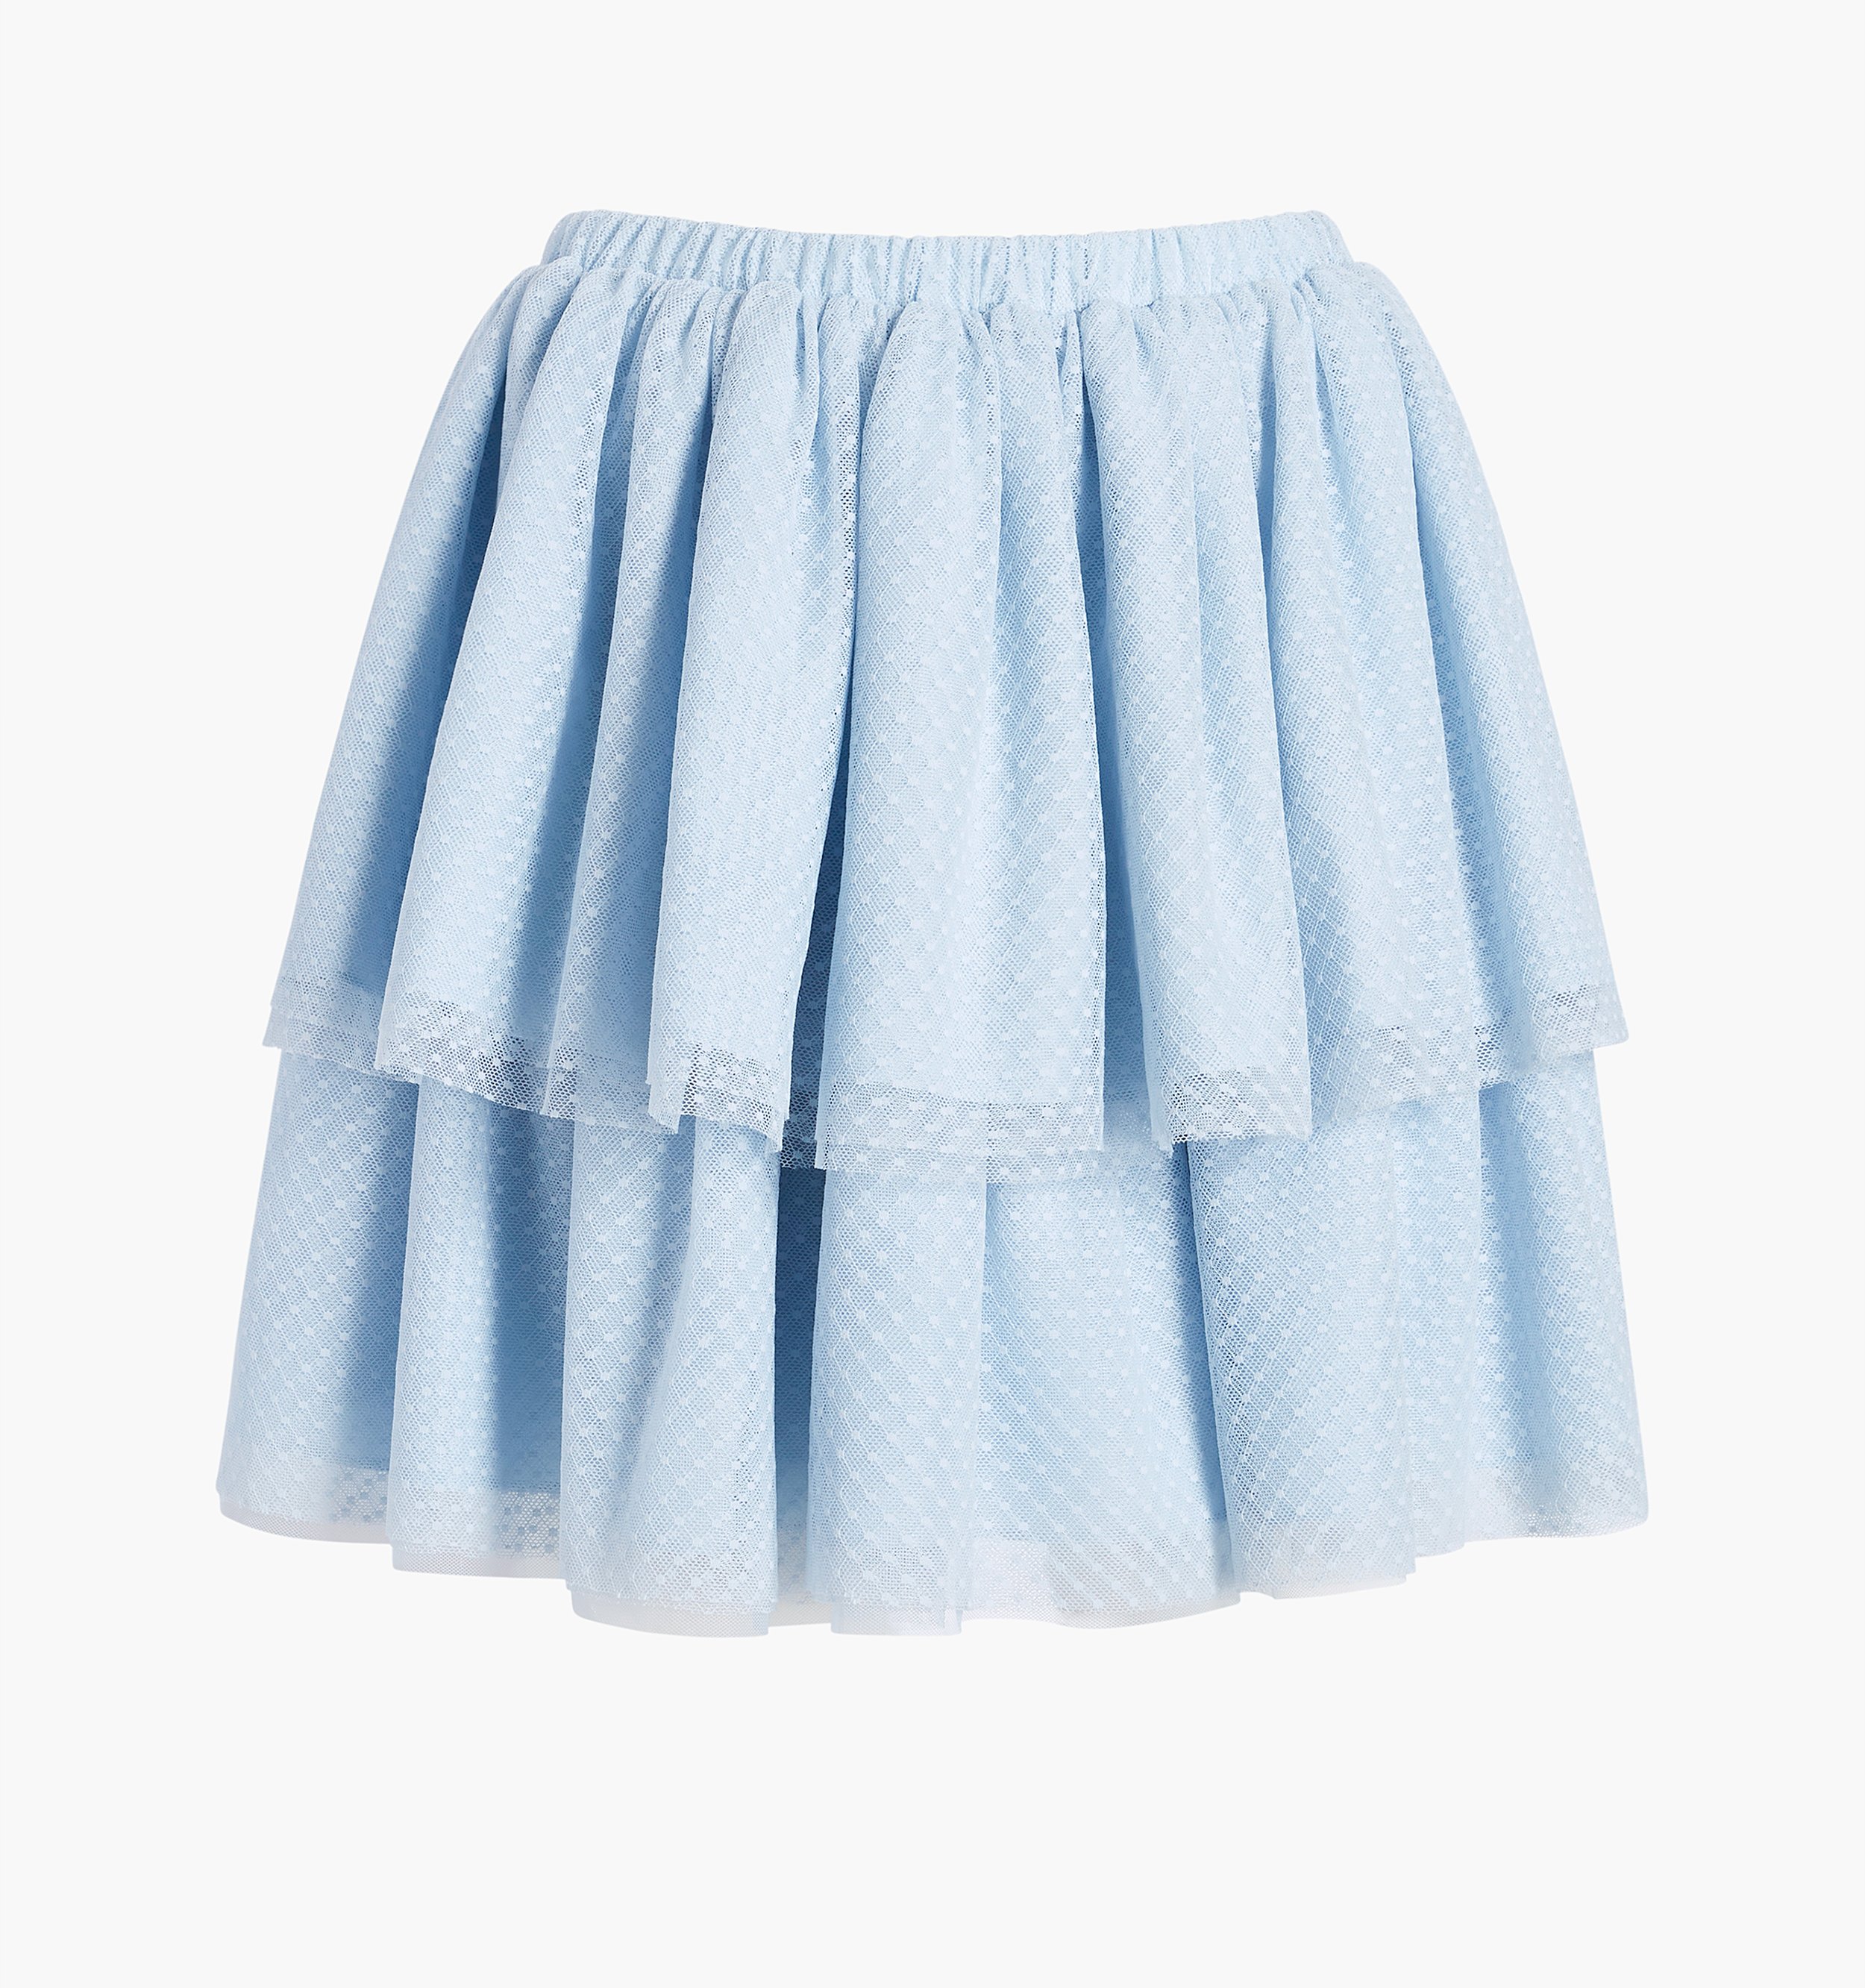 HHH465_The Clara Tulle Skirt_Powder Blue_A.jpg